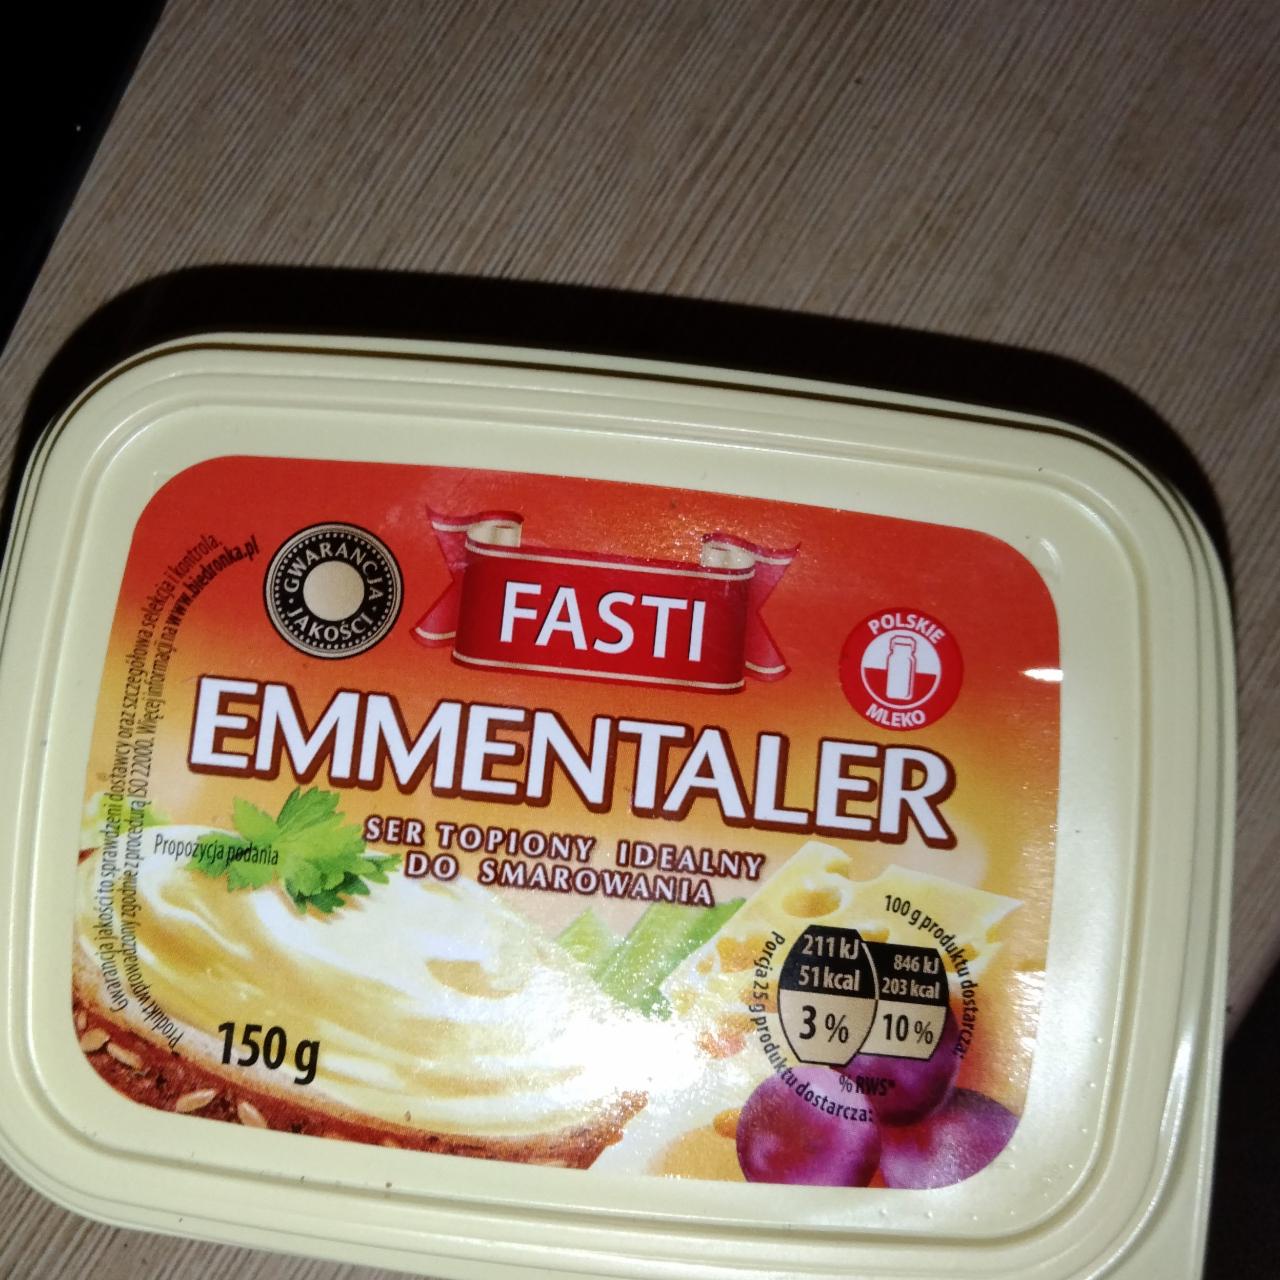 Фото - Сыр плавленый Emmentaler ser topiony idealny do smarowania Fasti